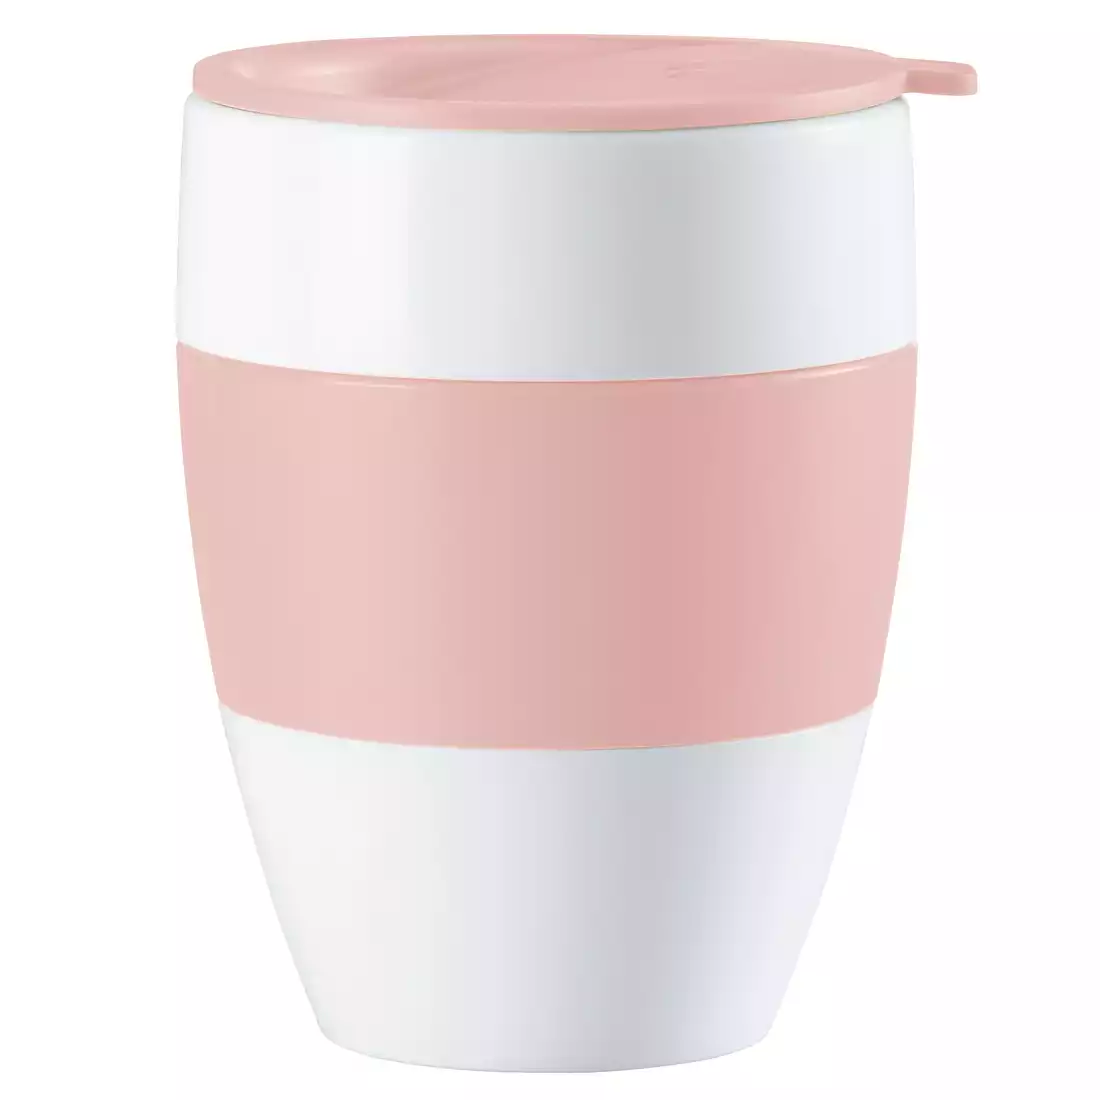 KOZIOL AROMA TO GO 2.0 thermal mug 400 ml, white and pink